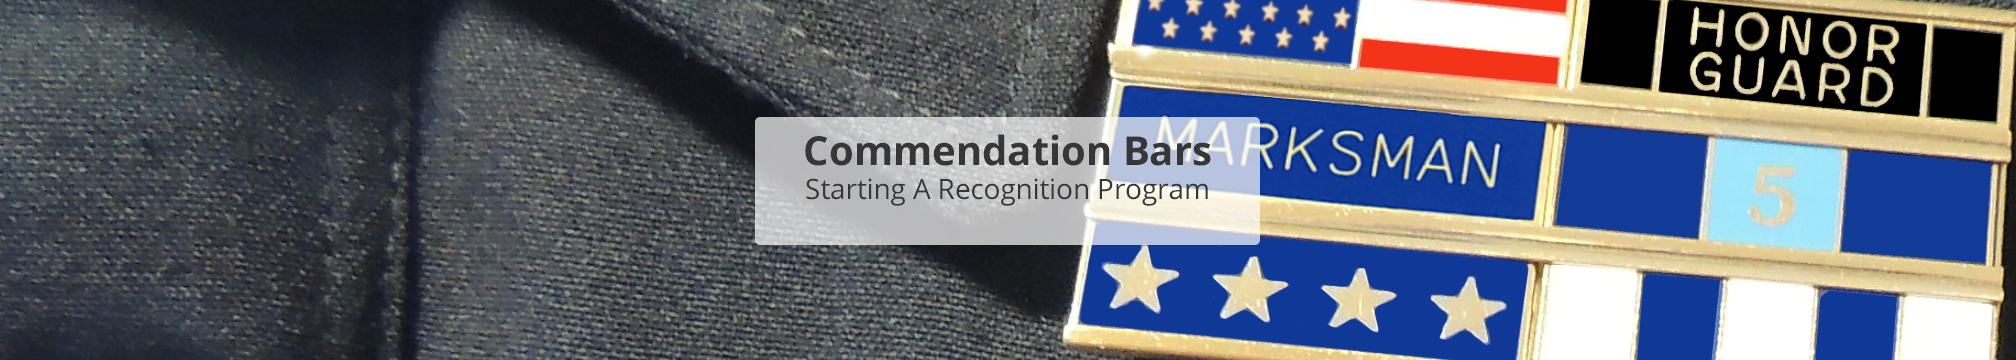 Commendation Bar